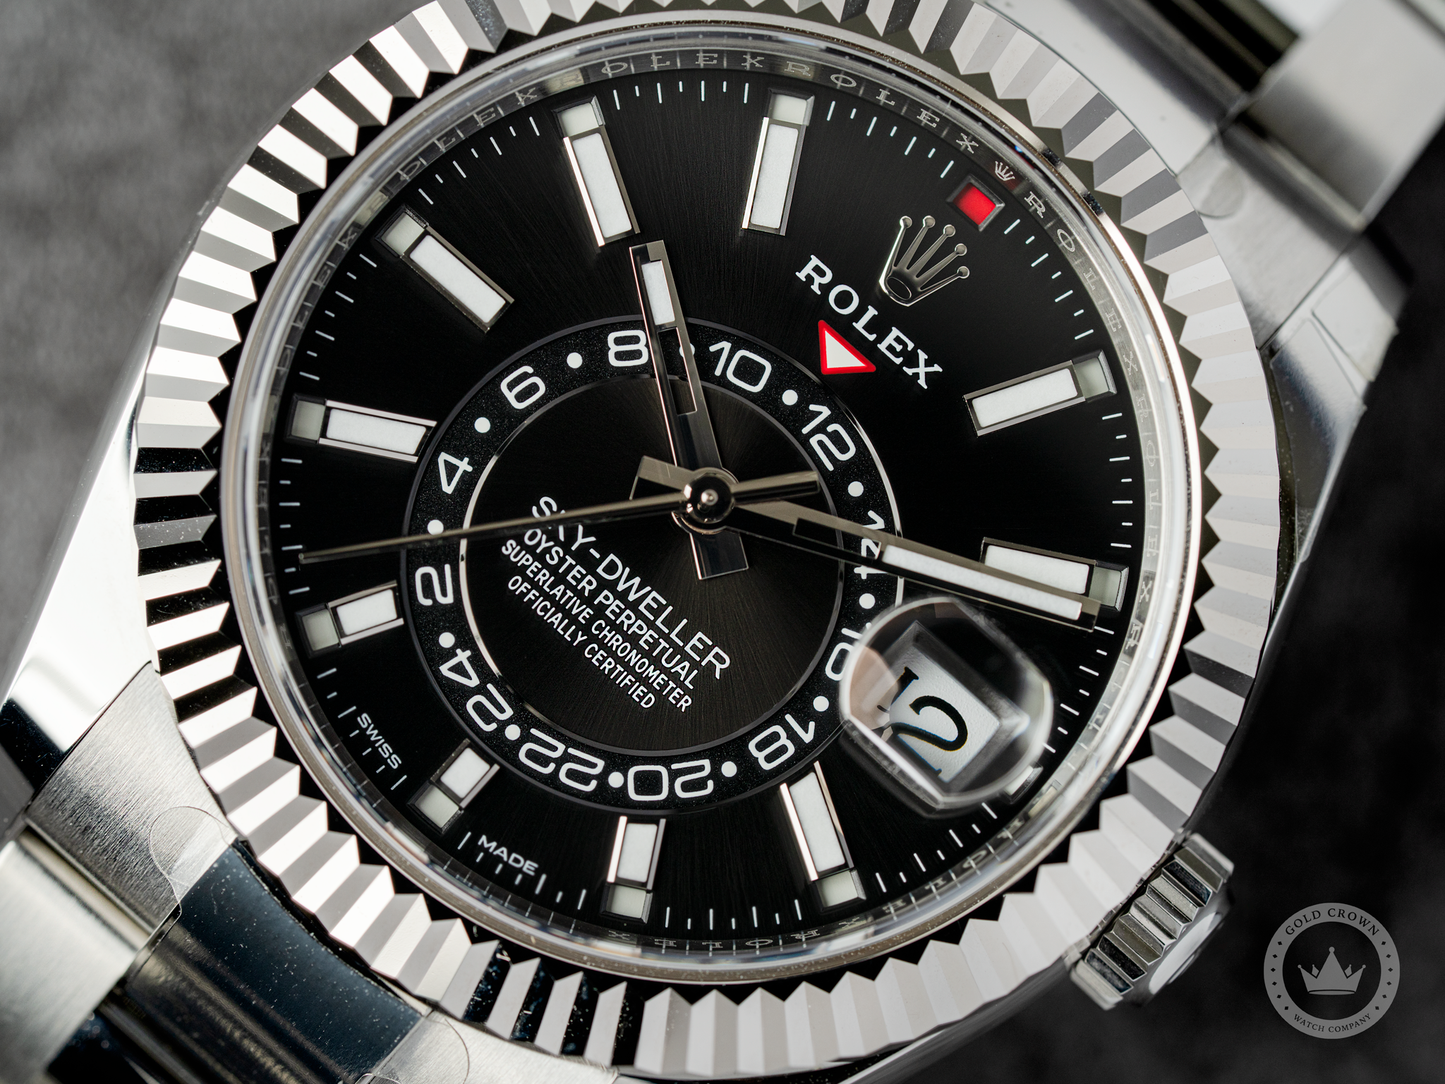 Brand New Rolex Sky-Dweller 326934 Watch and Box